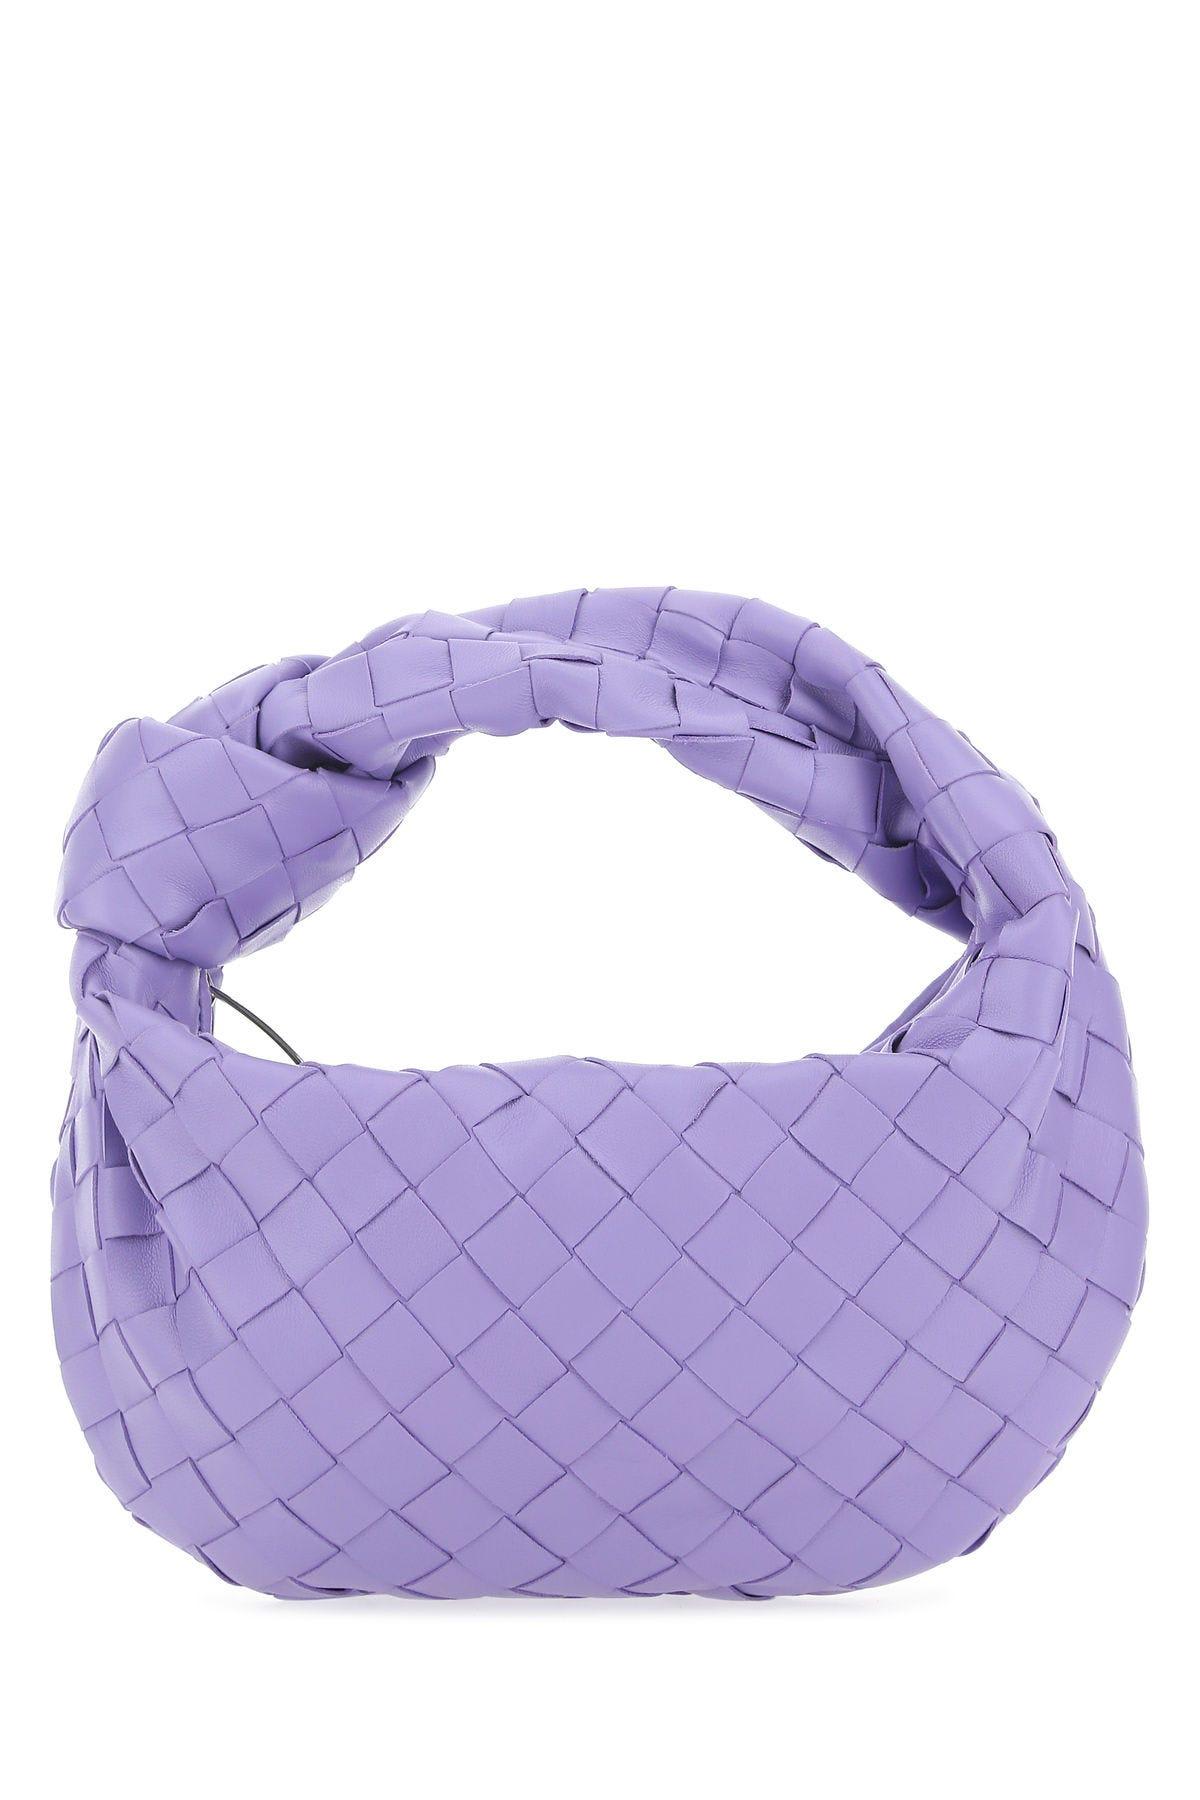 Bottega Veneta Lilac Nappa Leather Mini Jodie Handbag